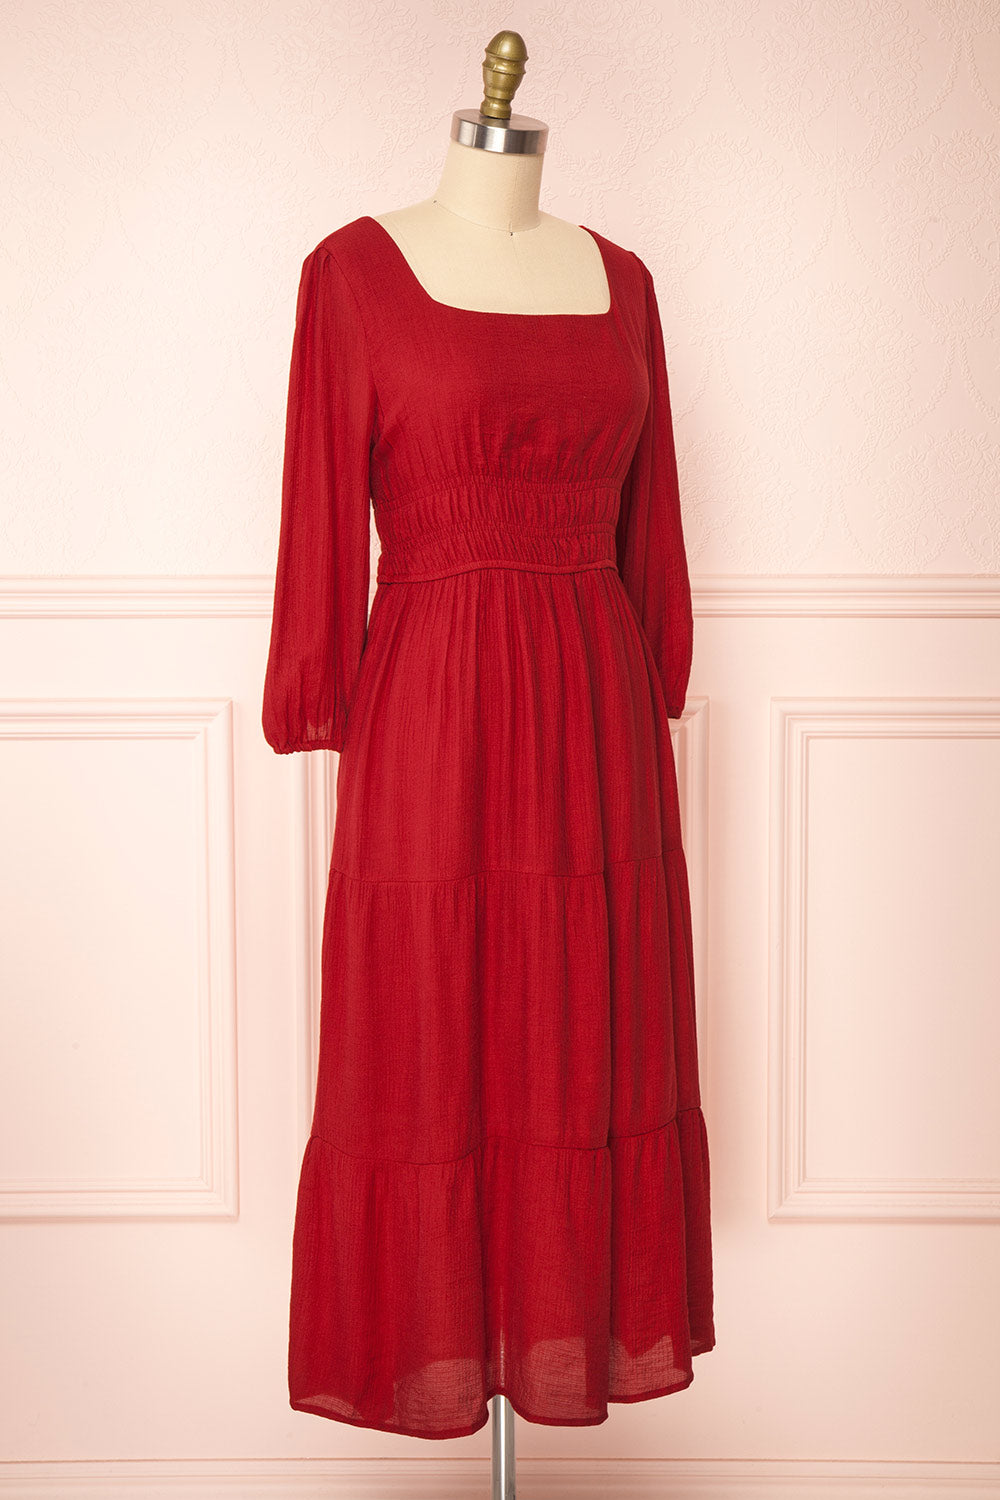 Badira Red Tiered Midi Dress w/ Square Neckline | Boutique 1861 side view 